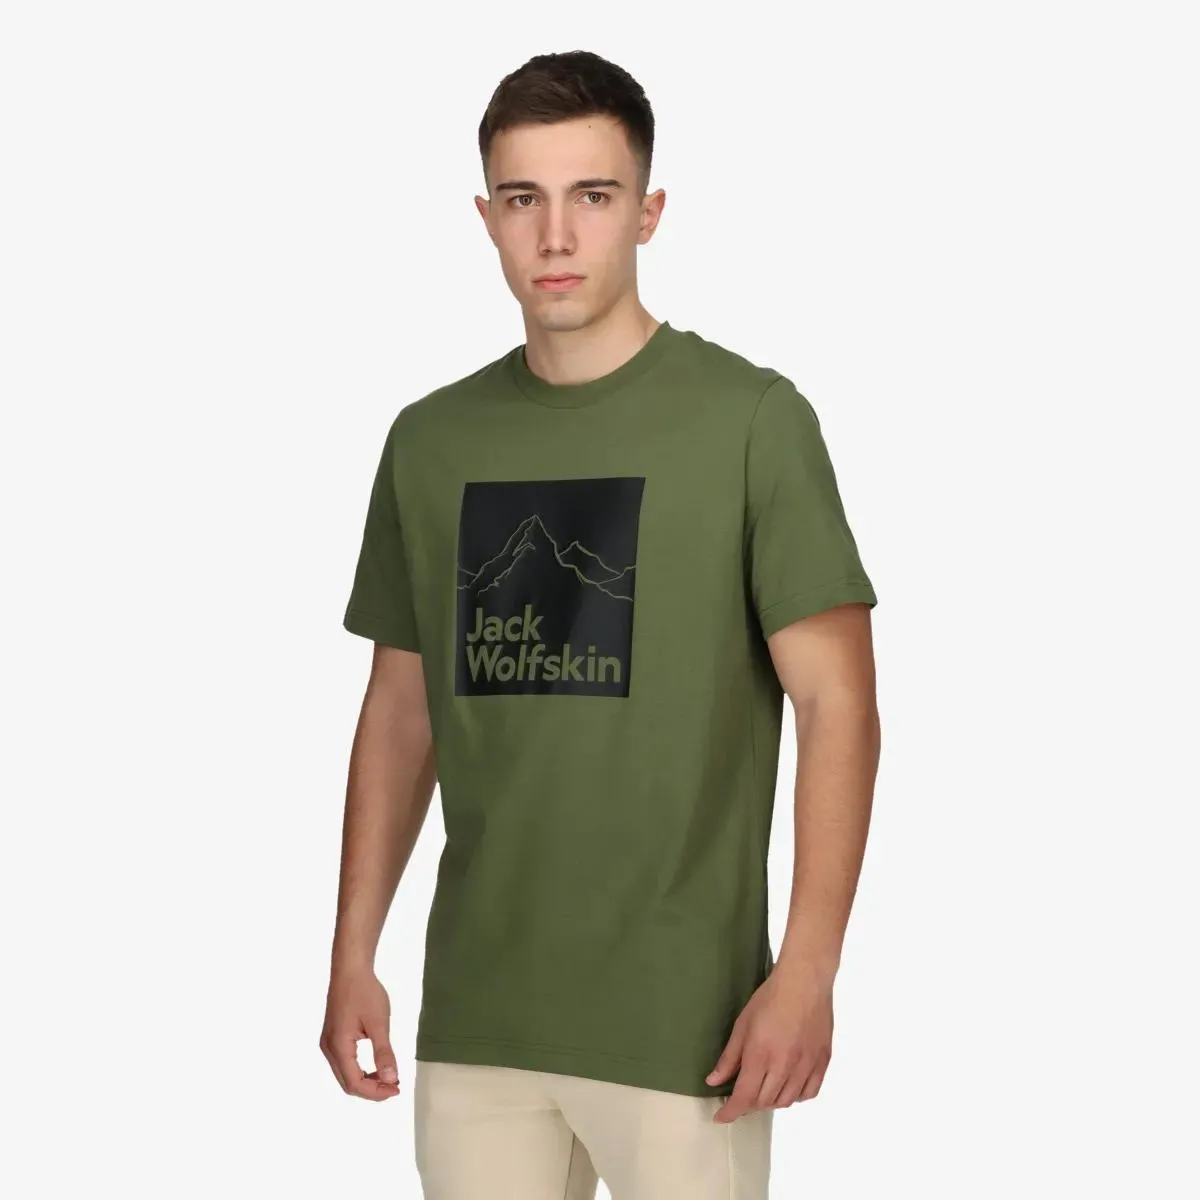 Jack Wolfskin T-shirt BRAND T M 